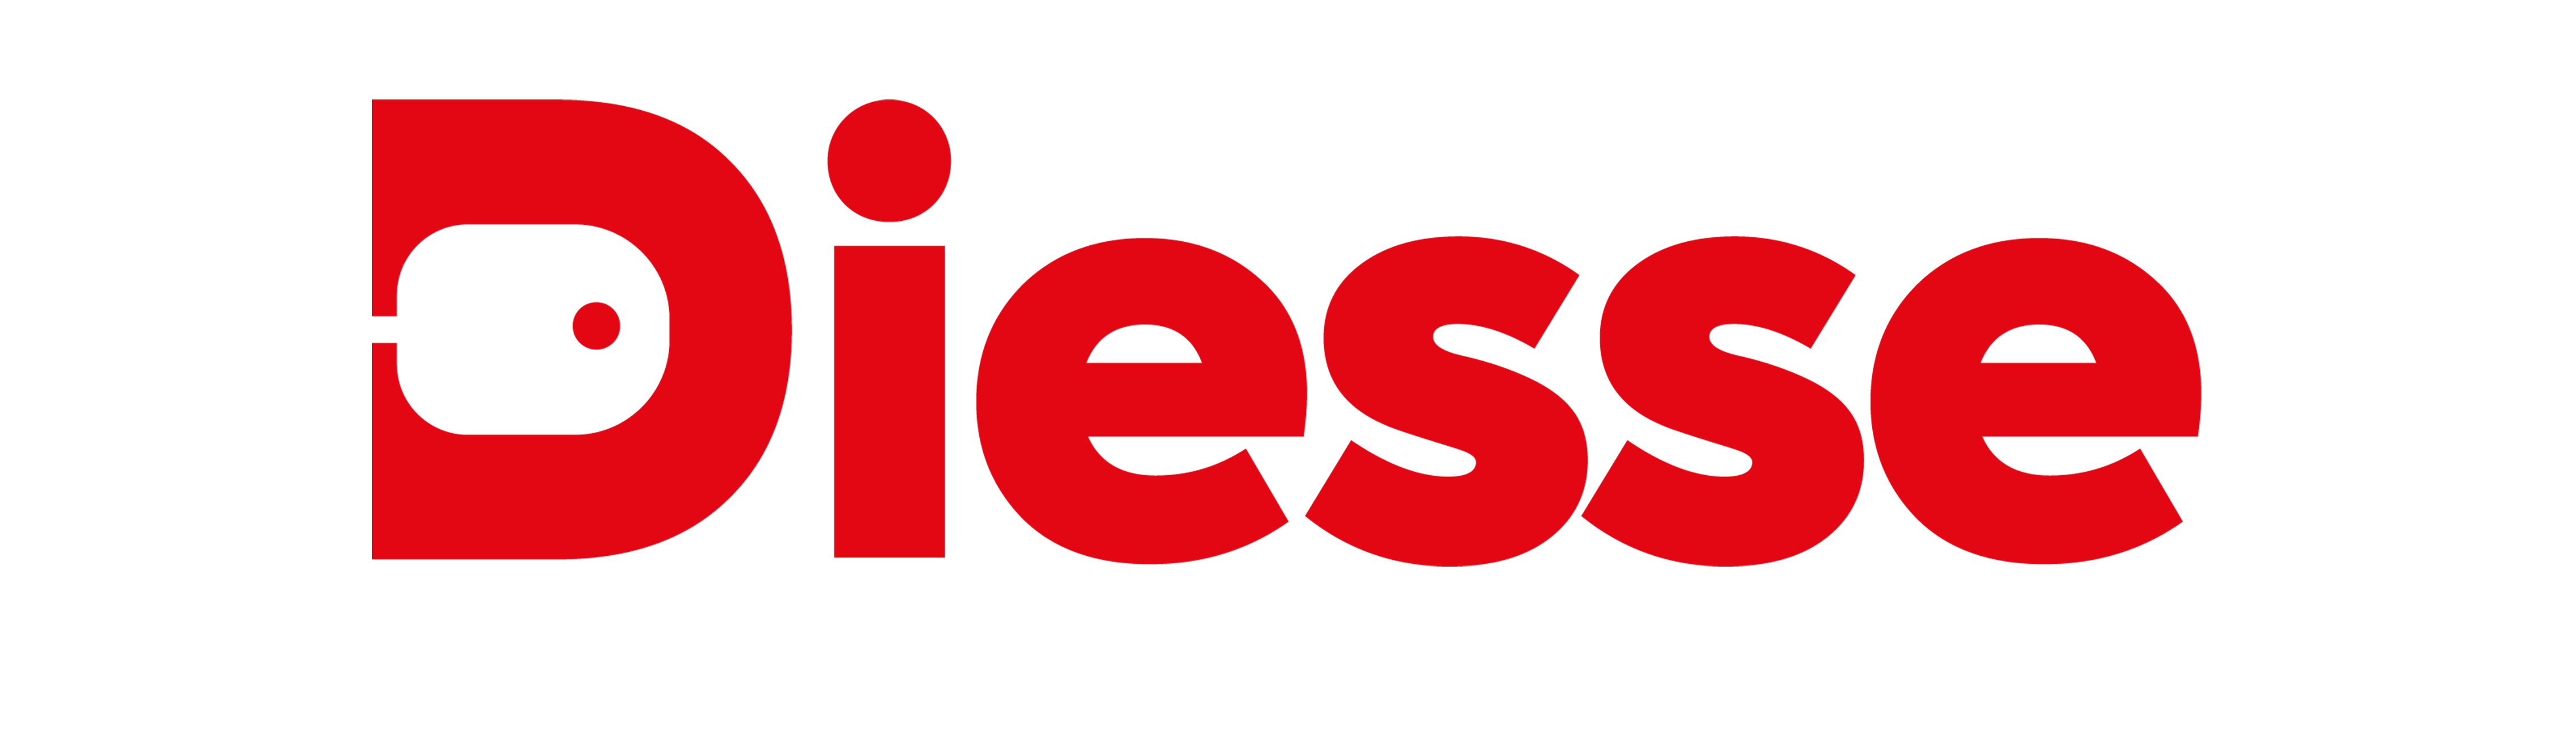 Diesse-logo-ufficiale